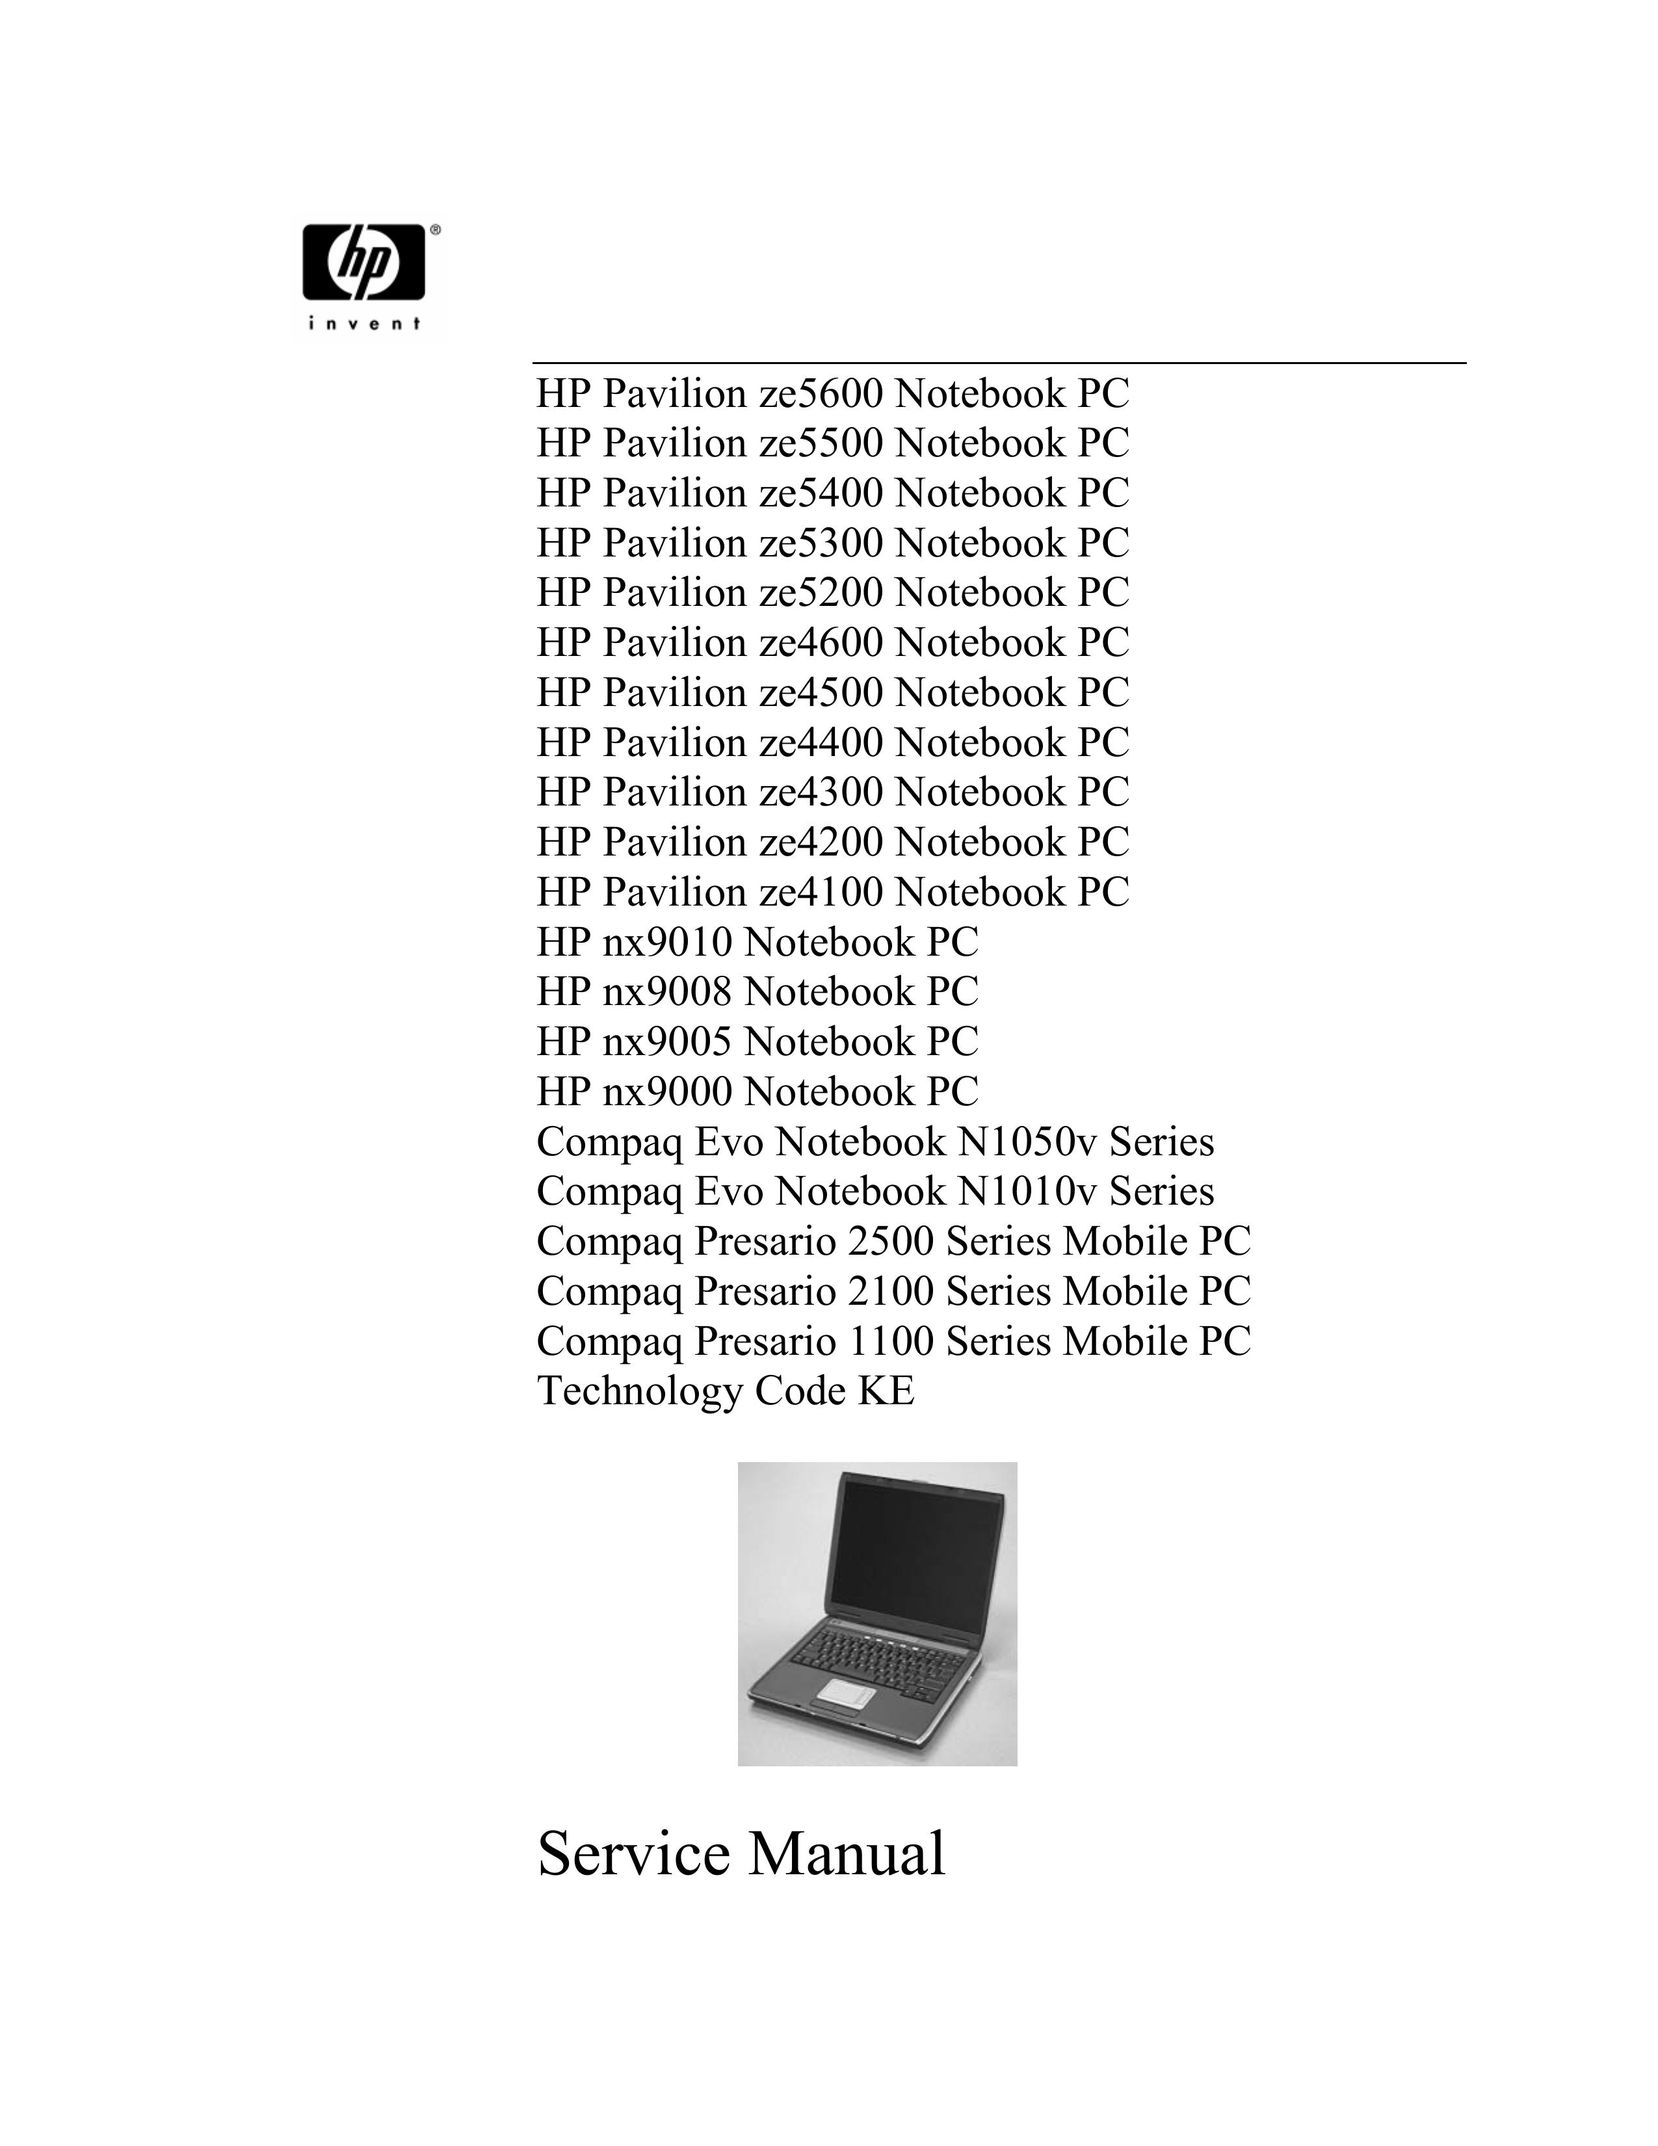 HP (Hewlett-Packard) NX9008 Tablet Accessory User Manual